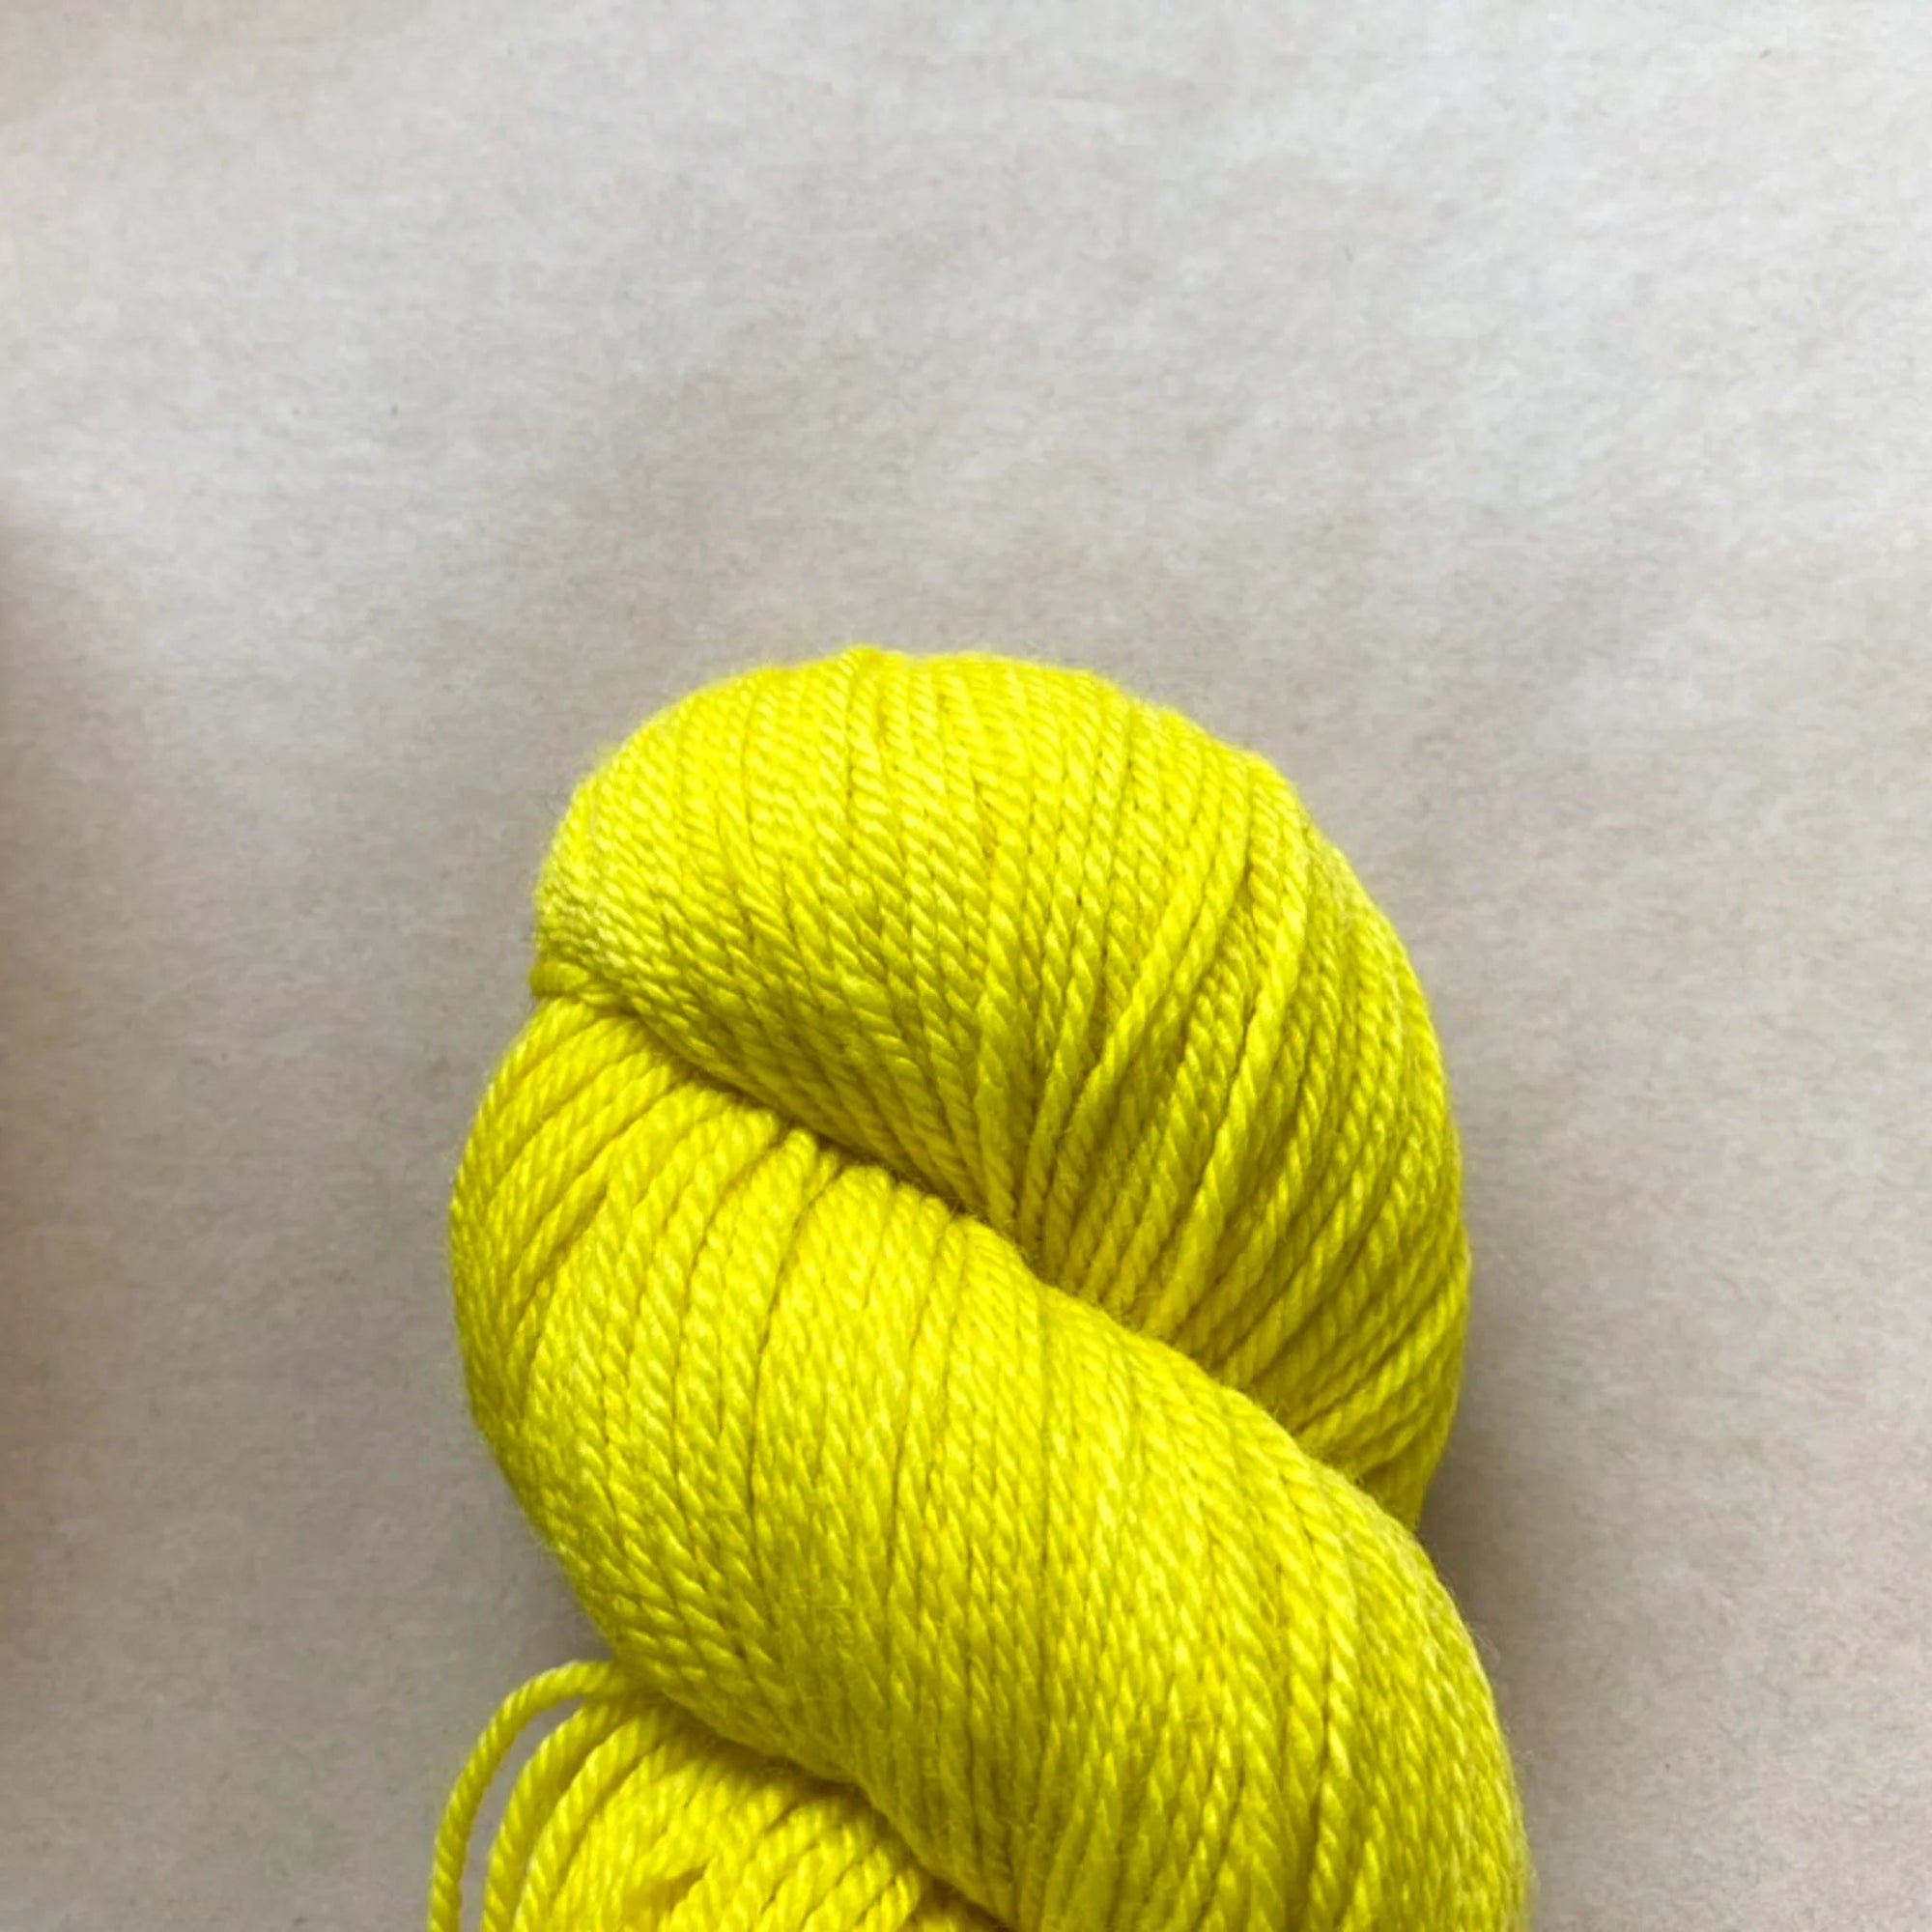 Koigu Jasmine - Koigu - J2100-0004 - The Little Yarn Store